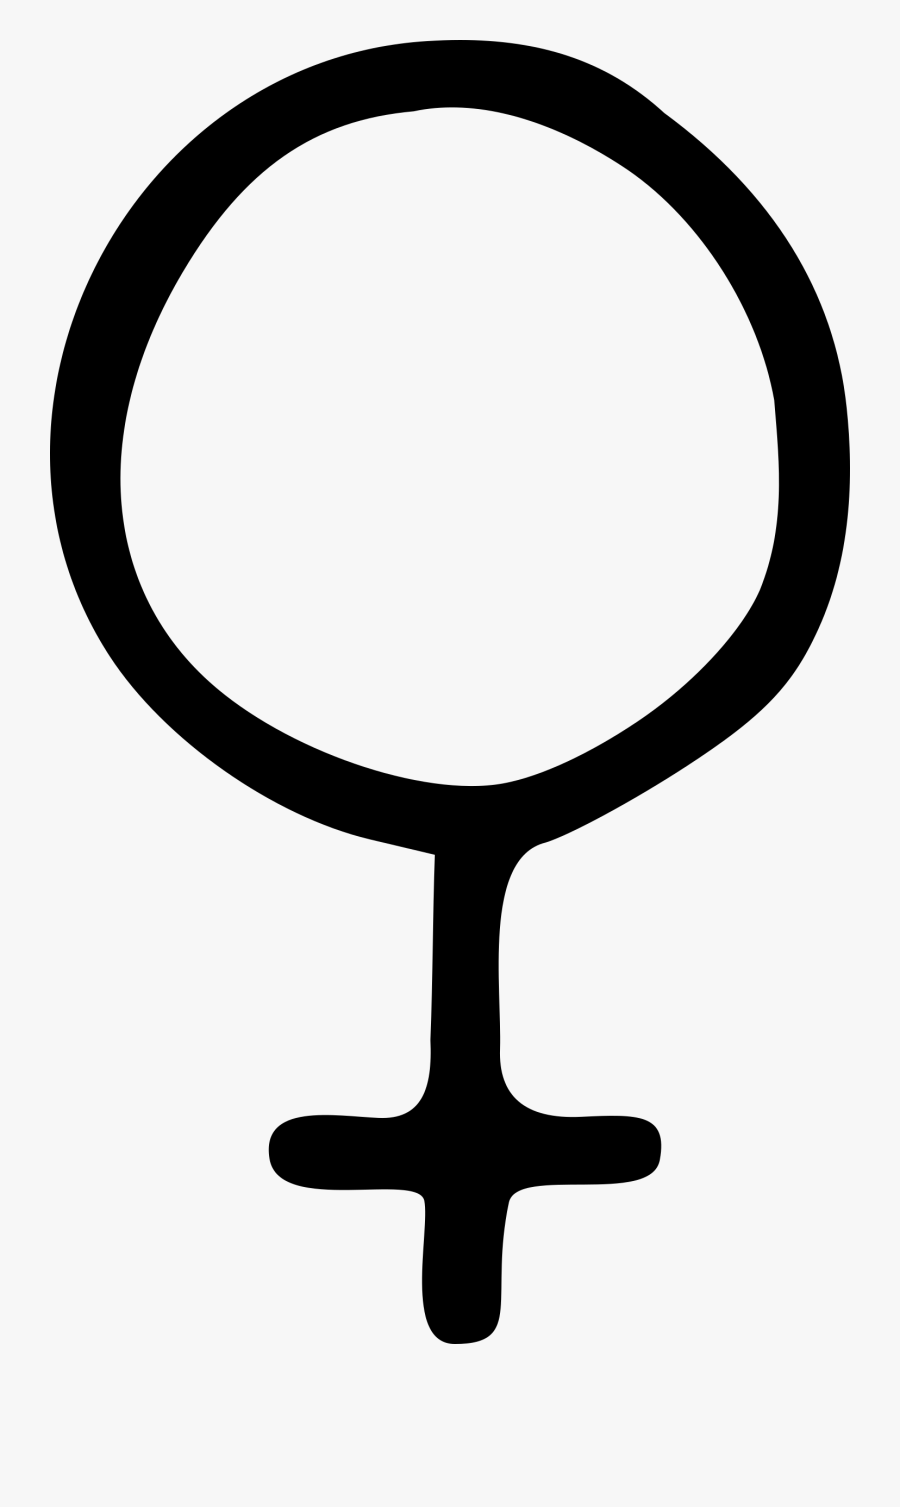 Gender Woman Free Commercial - Female Gender Symbols .png, Transparent Clipart